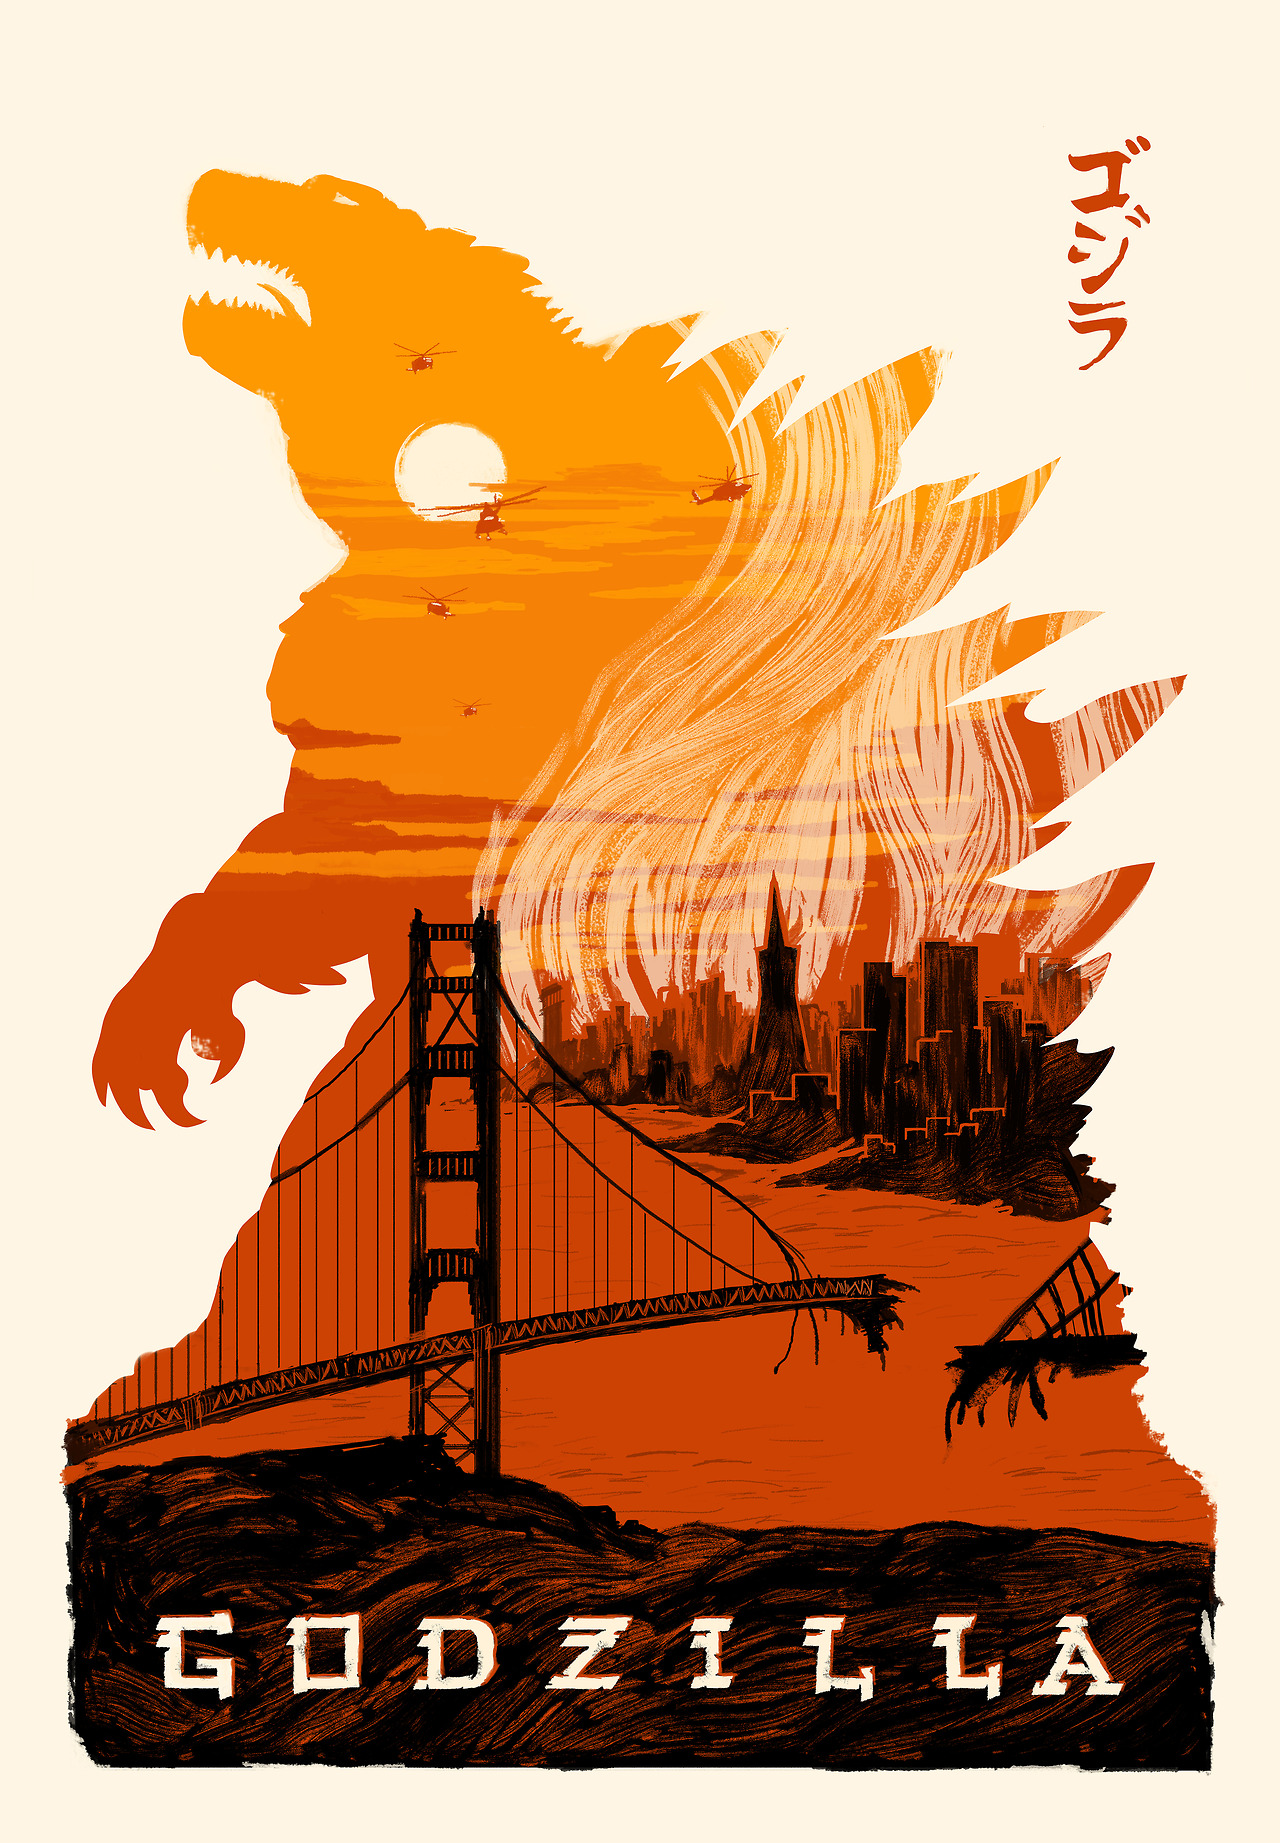 Godzilla Movie Poster by Tim Weakland and Kasey Gifford